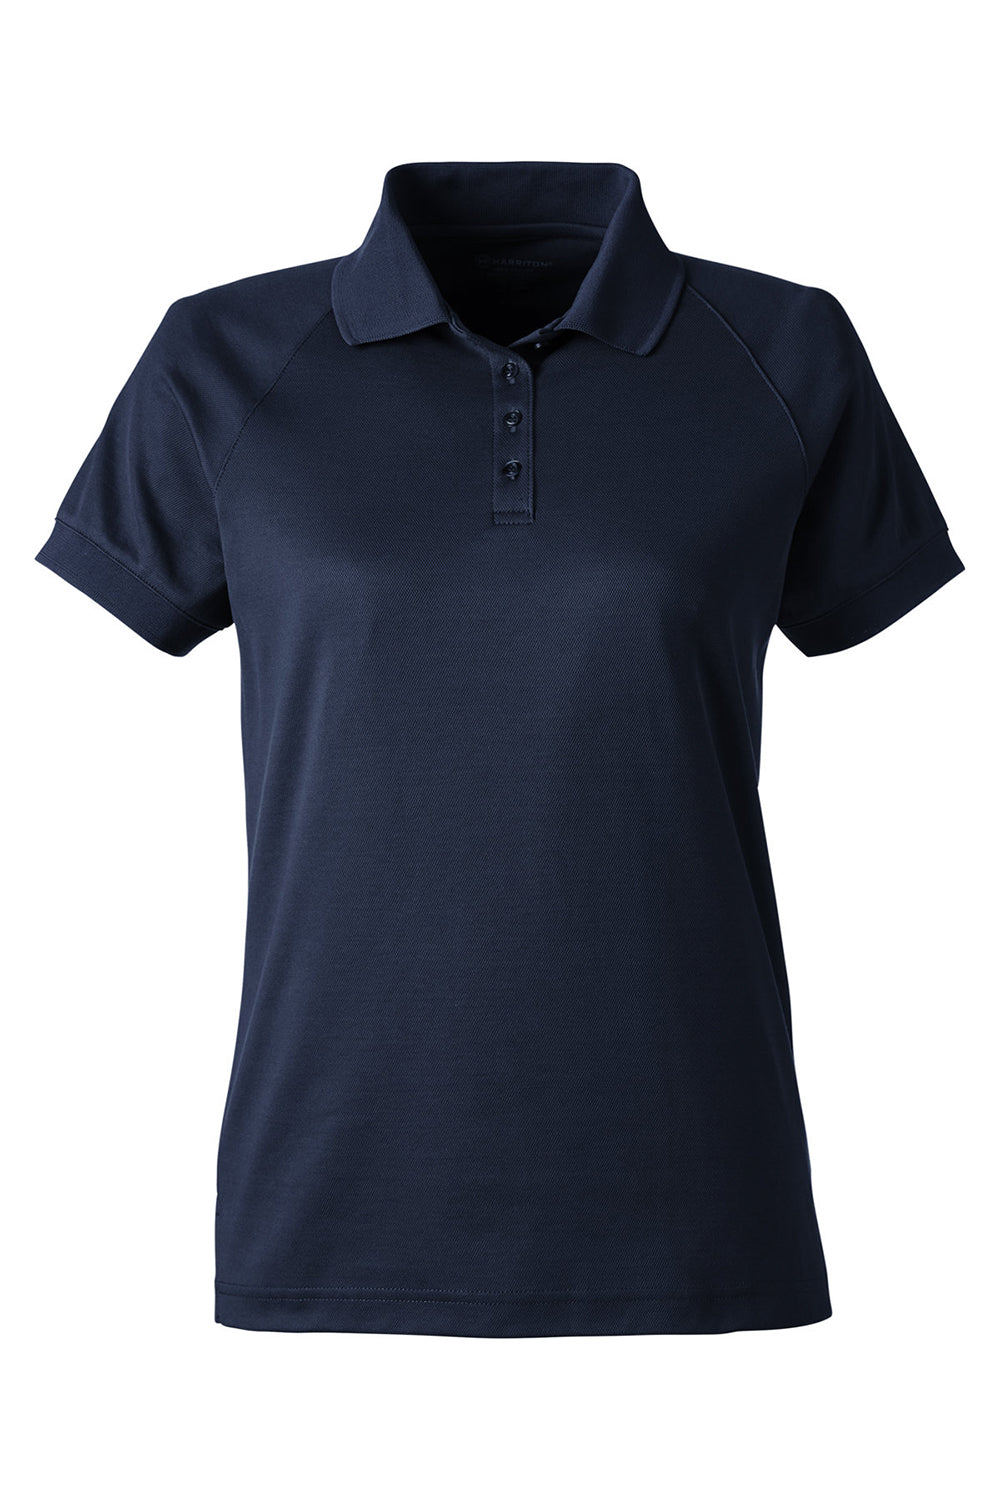 Harriton M208W Womens Charge Moisture Wicking Short Sleeve Polo Shirt Dark Navy Blue Flat Front